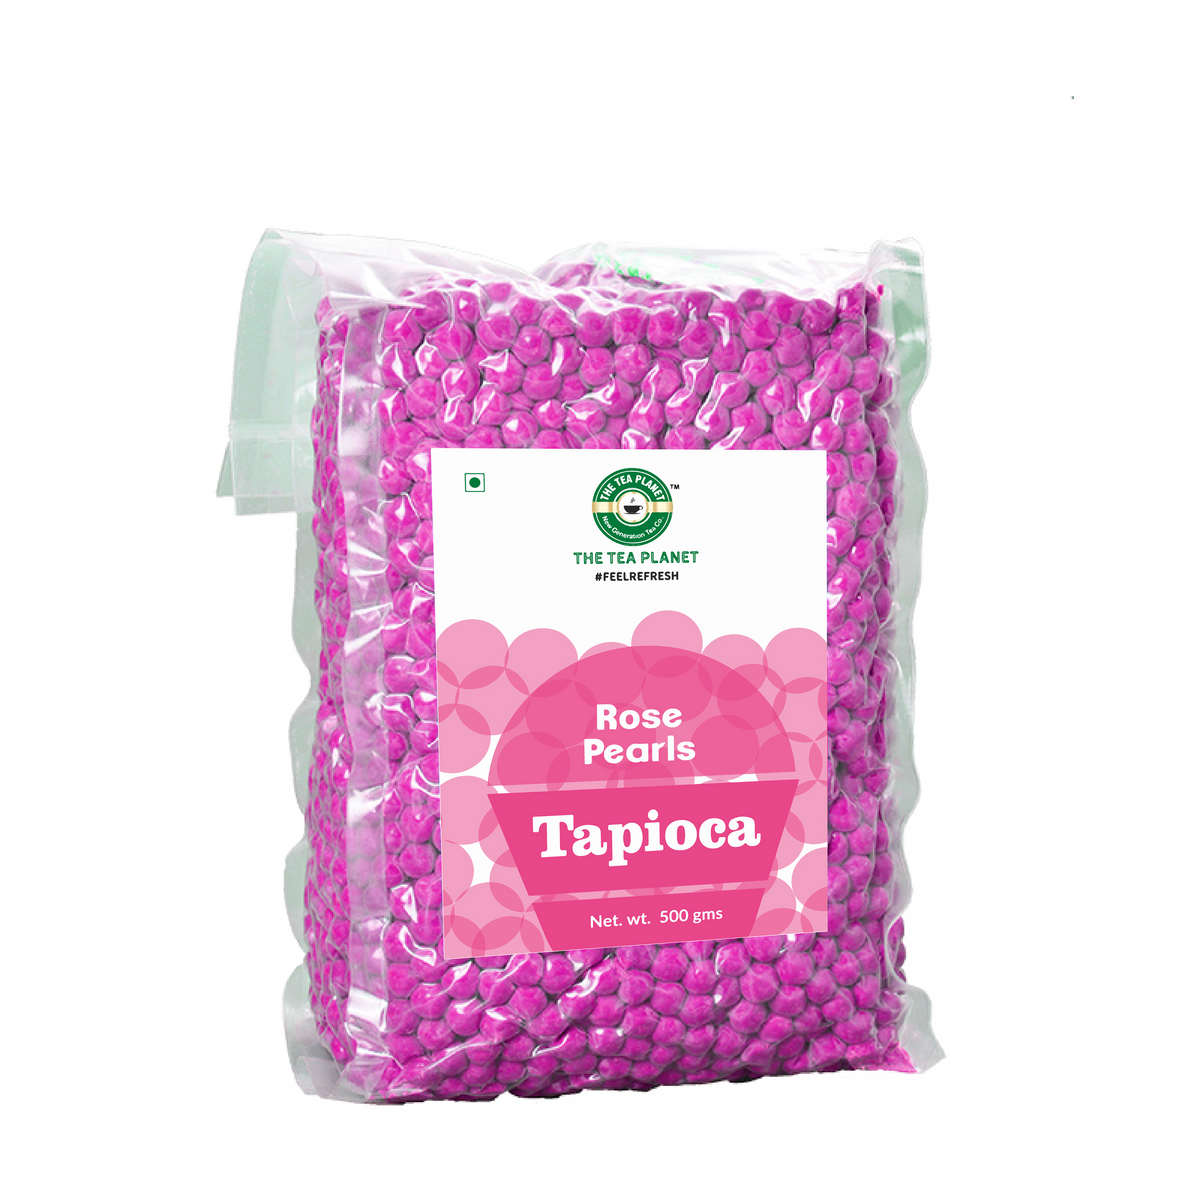 Rose Tapioca Pearls - 500 gms